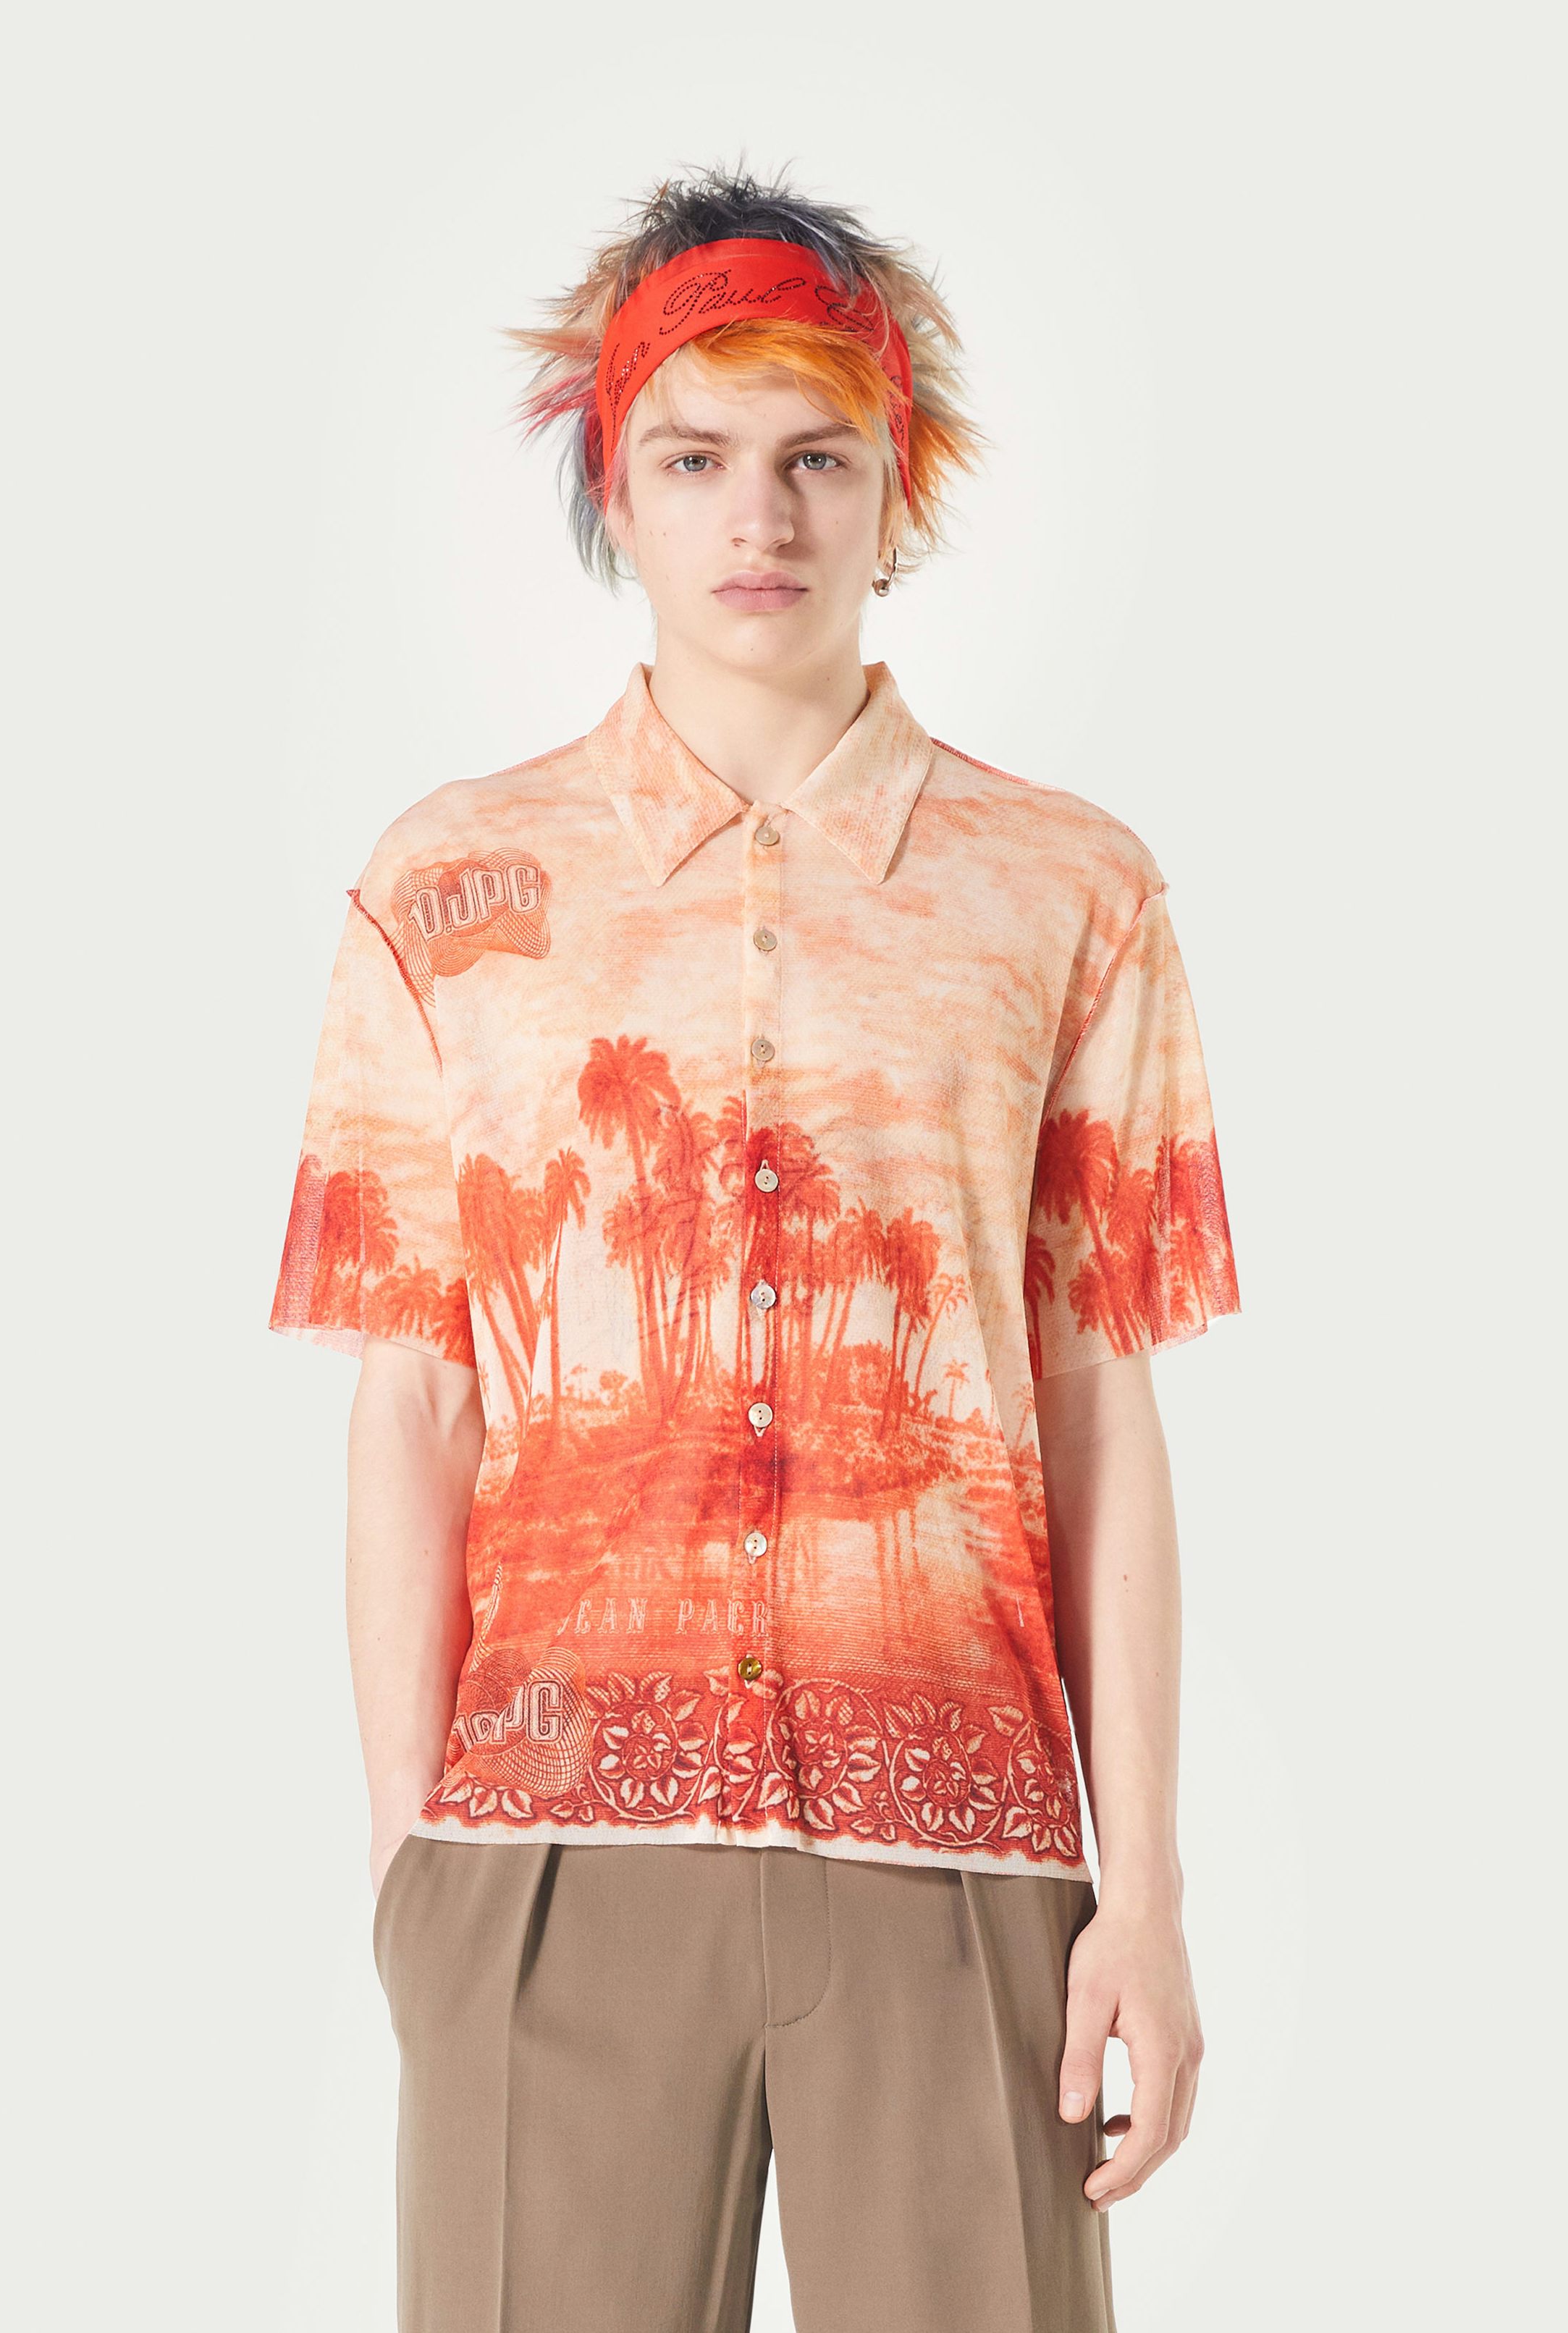 The Palm Tree Summer Shirt